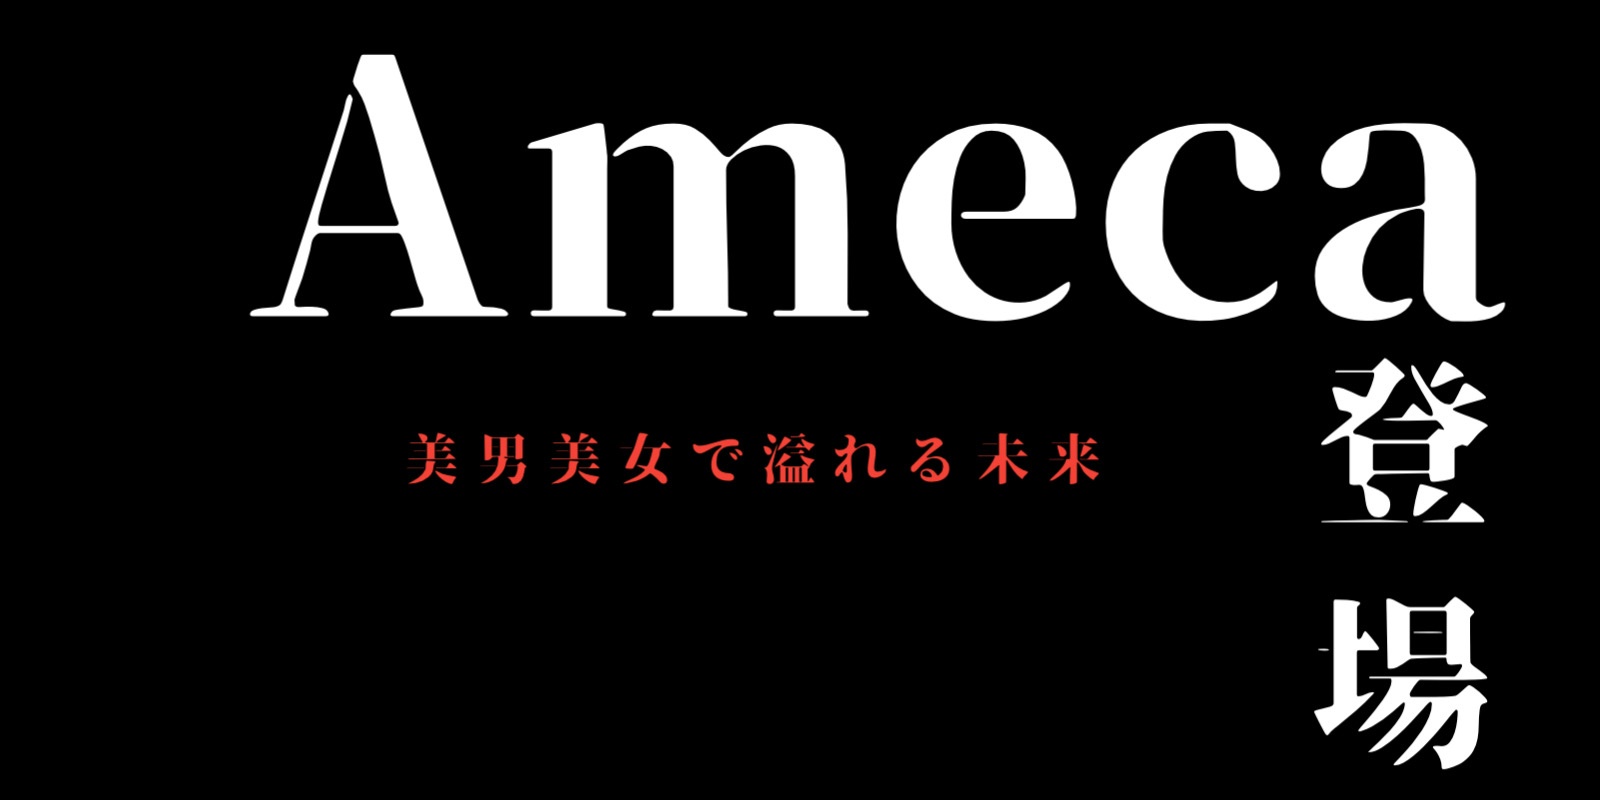 「Ameca」の登場で、未来は美男美女で溢れた世界？